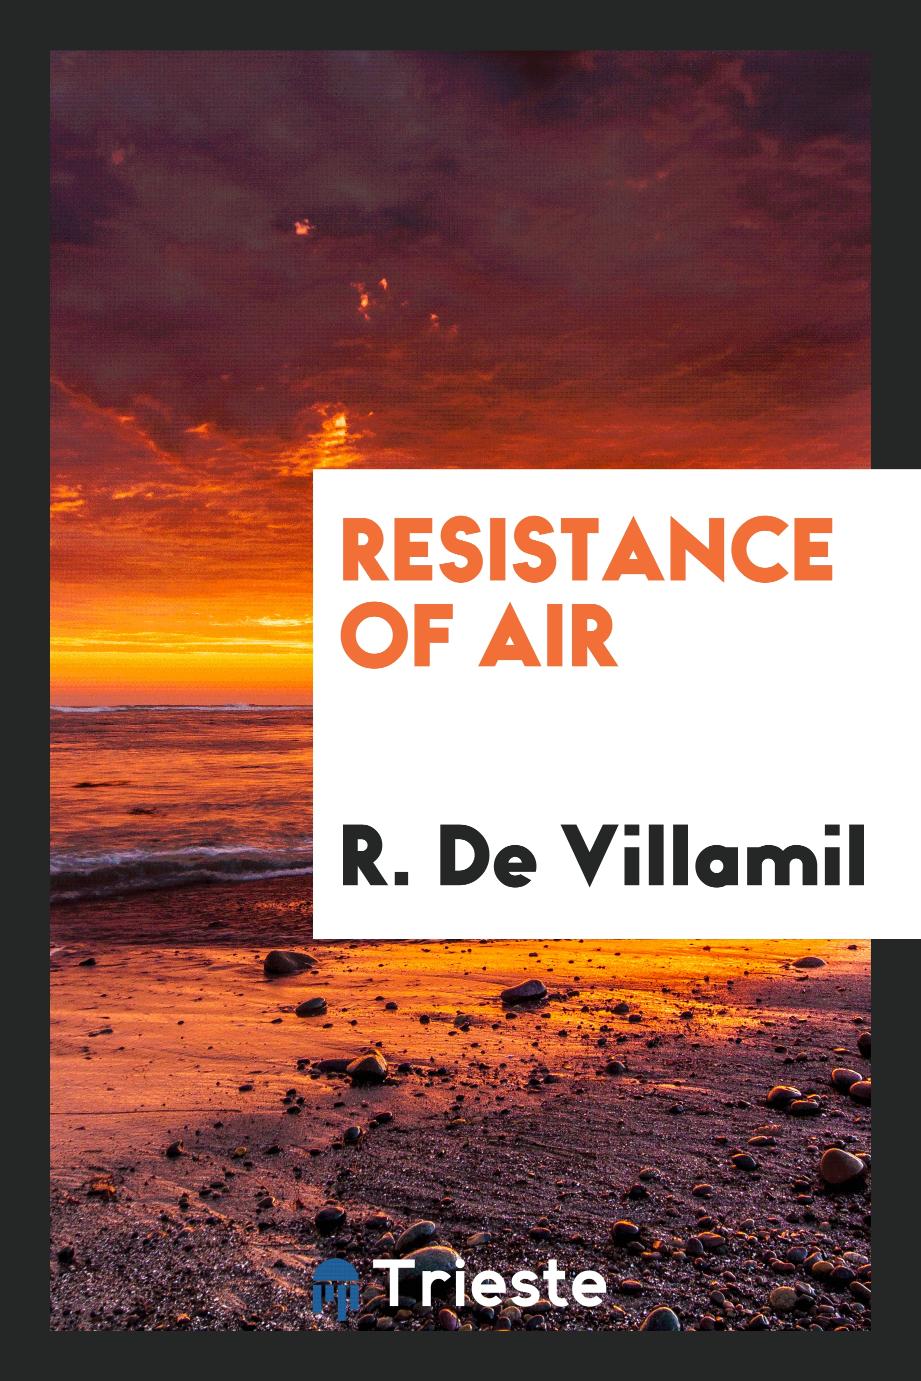 Resistance of air